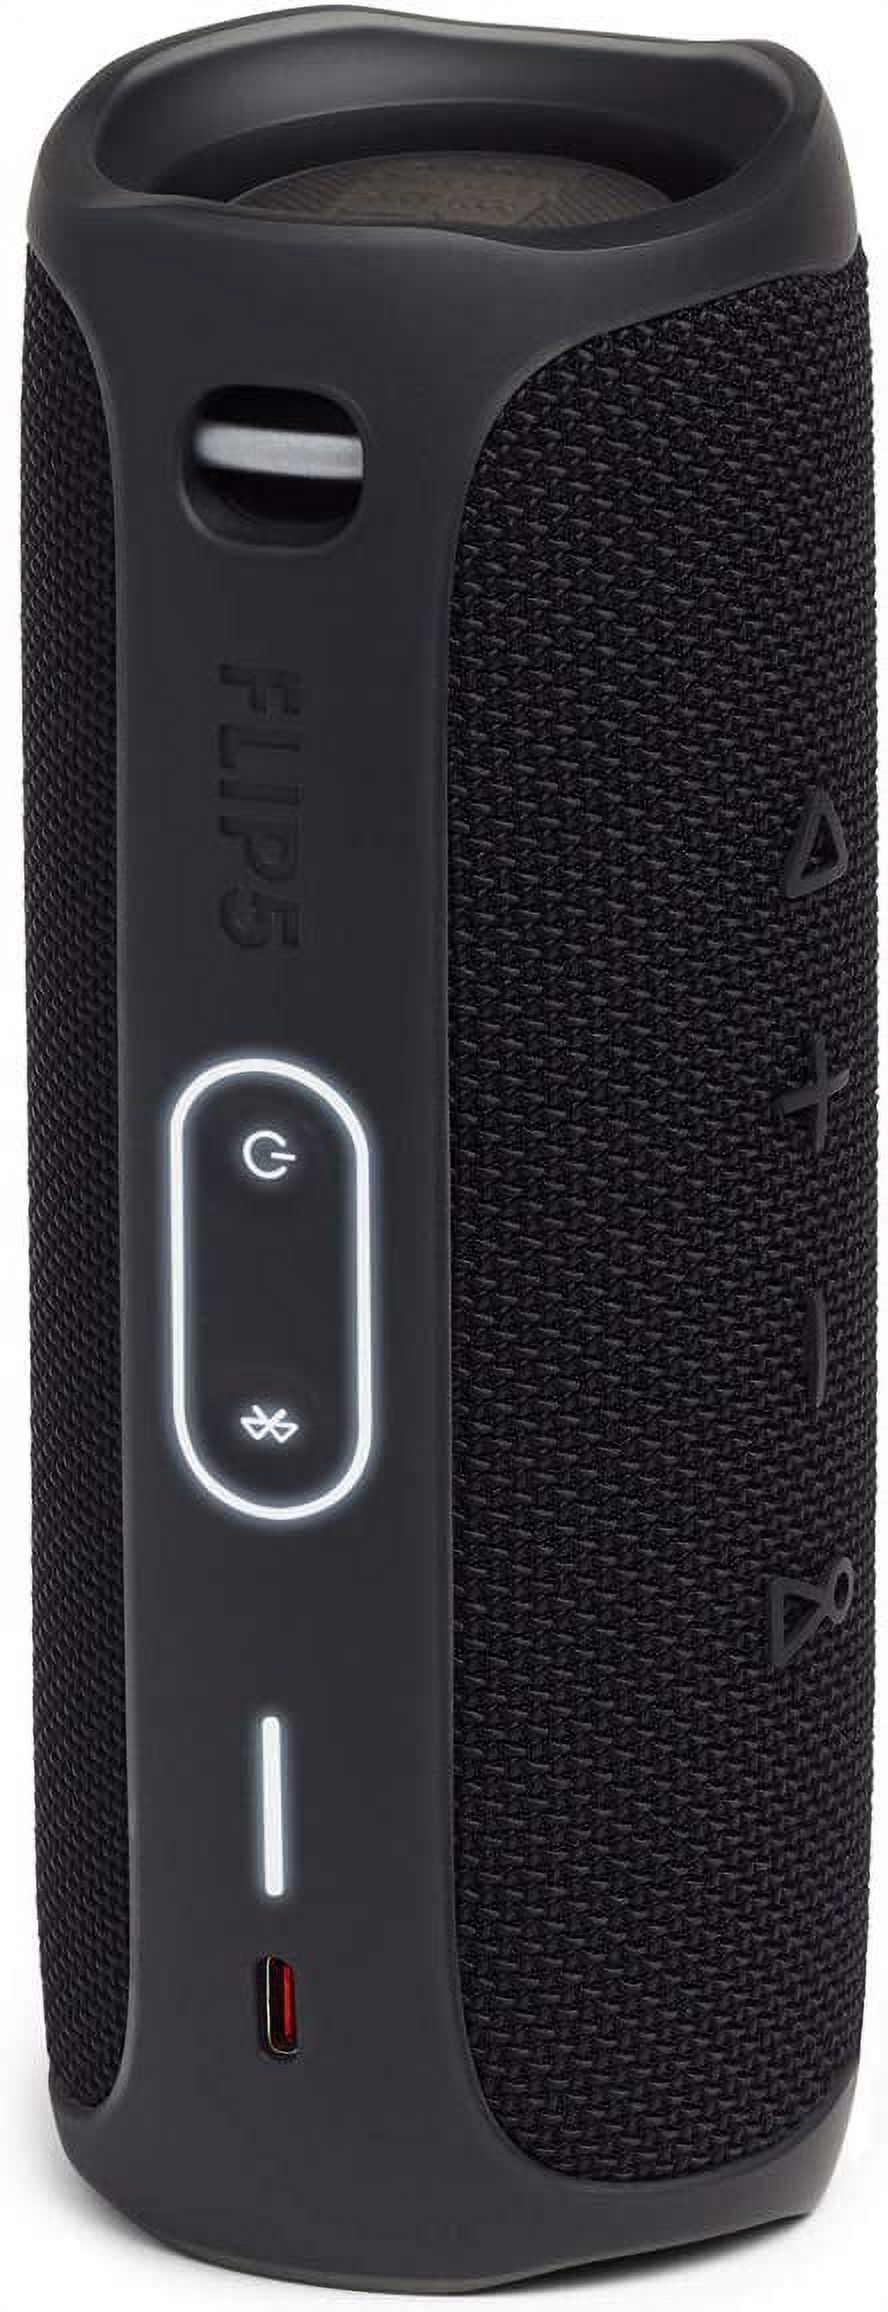 JBL Flip 5 Portable Waterproof Wireless Bluetooth Speaker - Black - image 4 of 5